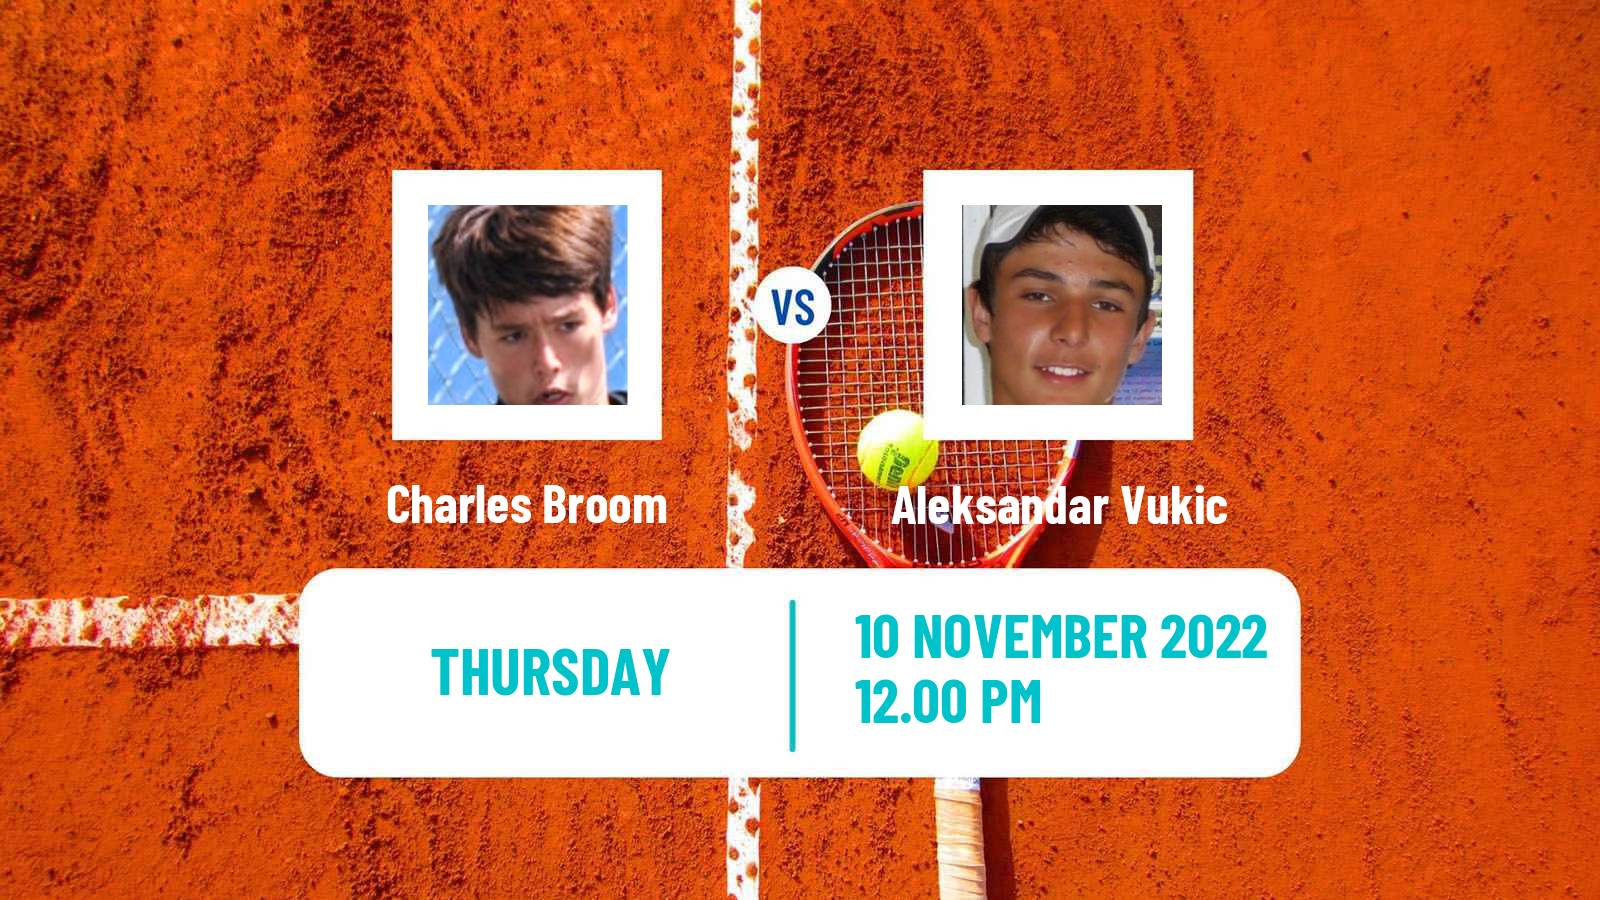 Tennis ATP Challenger Charles Broom - Aleksandar Vukic